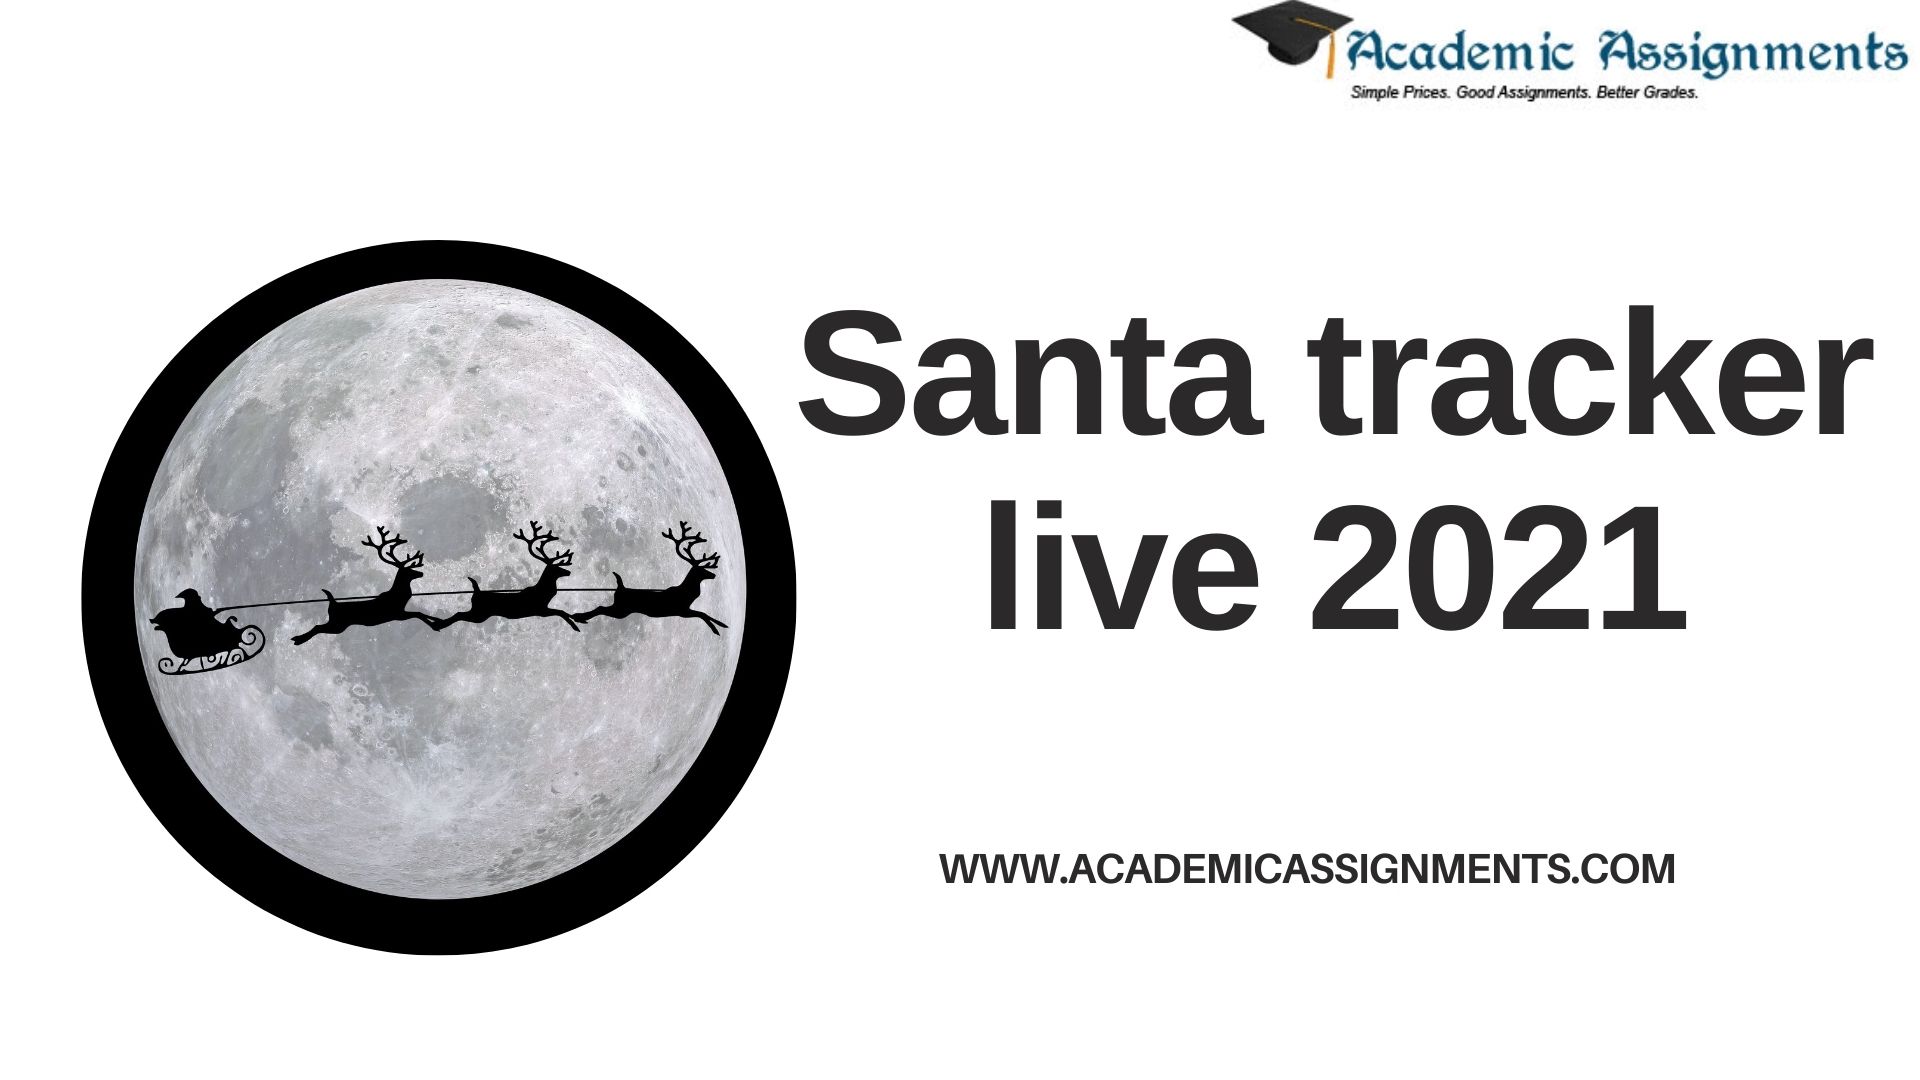 Santa tracker live 2021